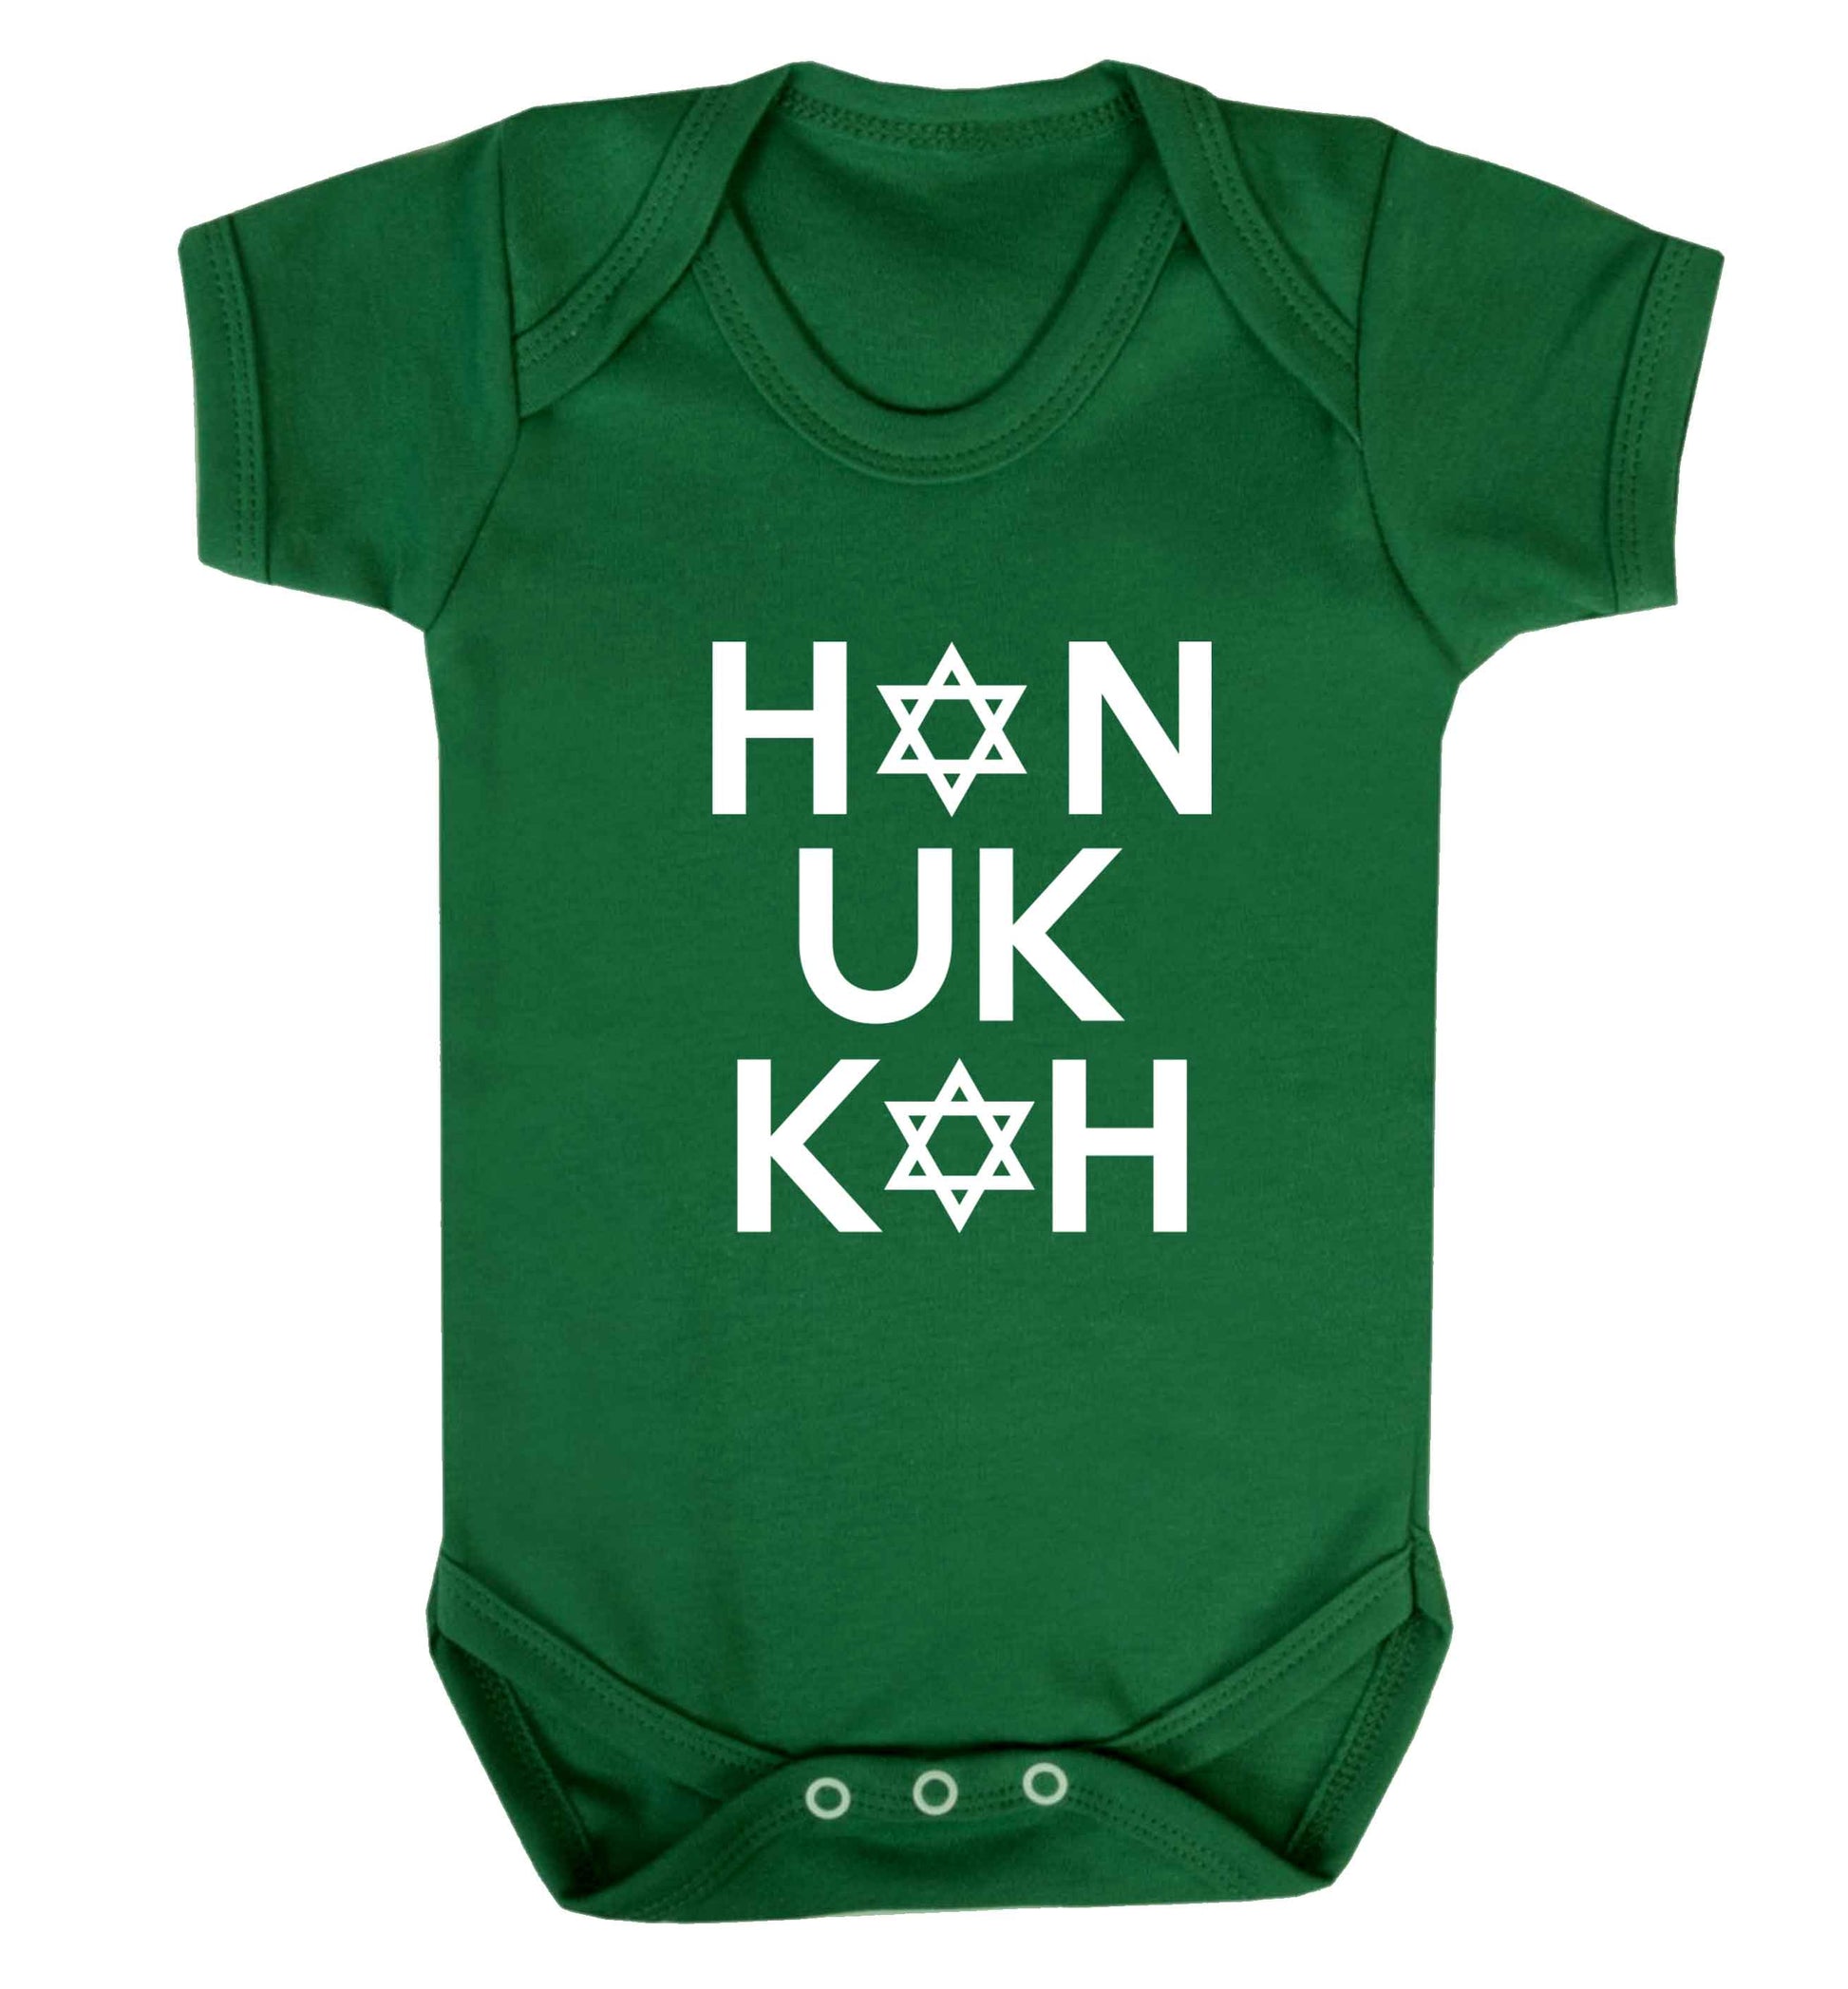 Han uk kah  Hanukkah star of david baby vest green 18-24 months